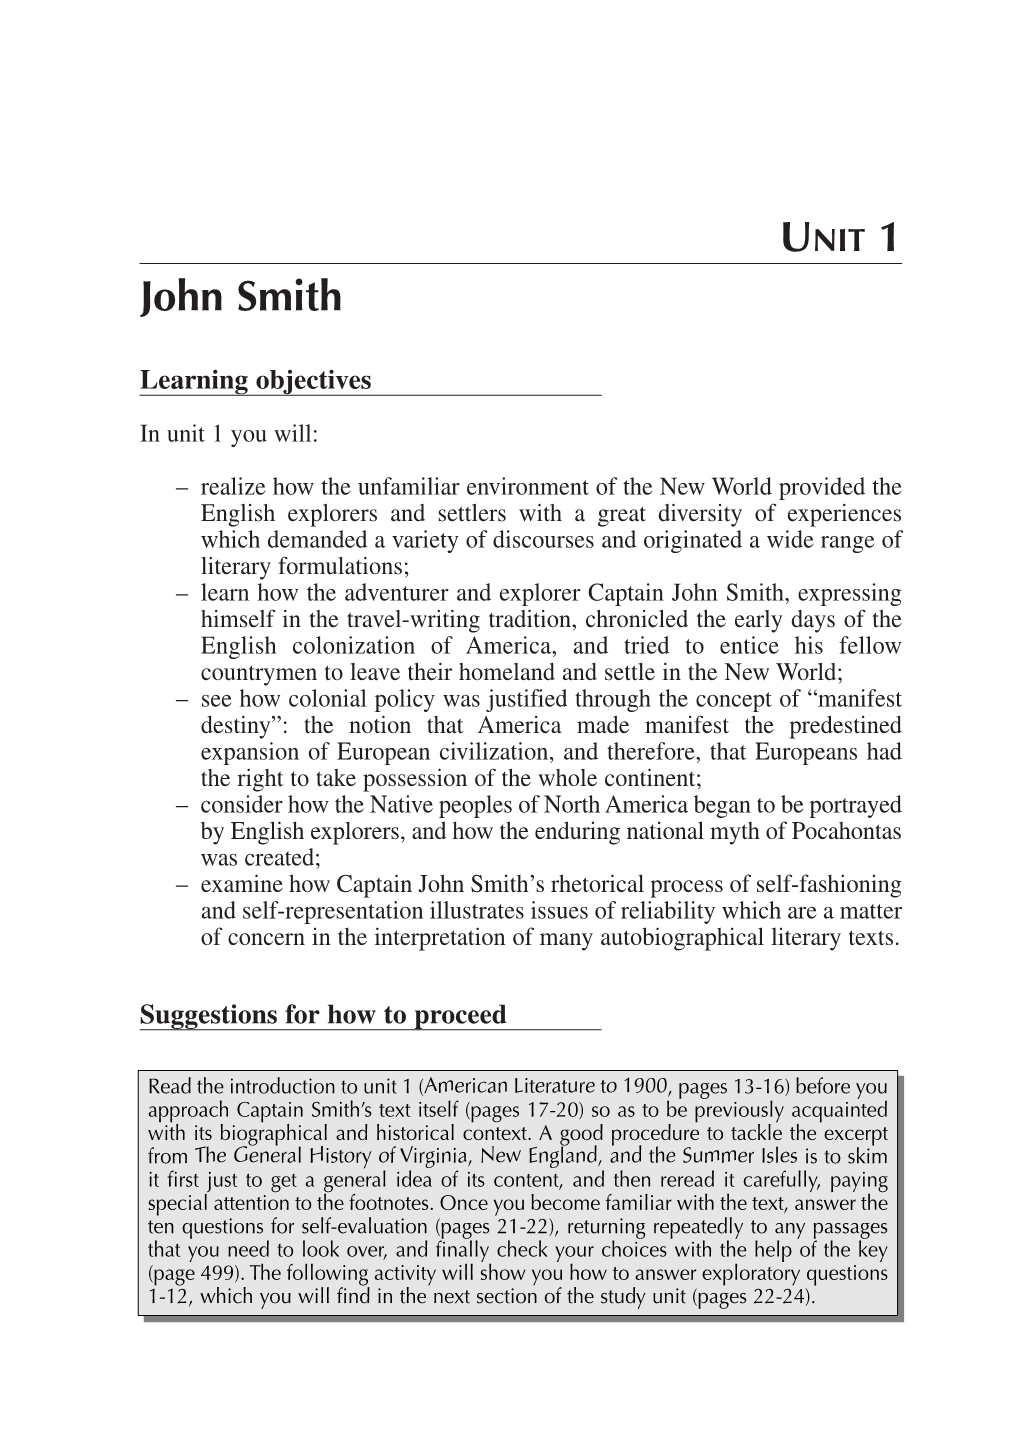 UNIT 1 John Smith